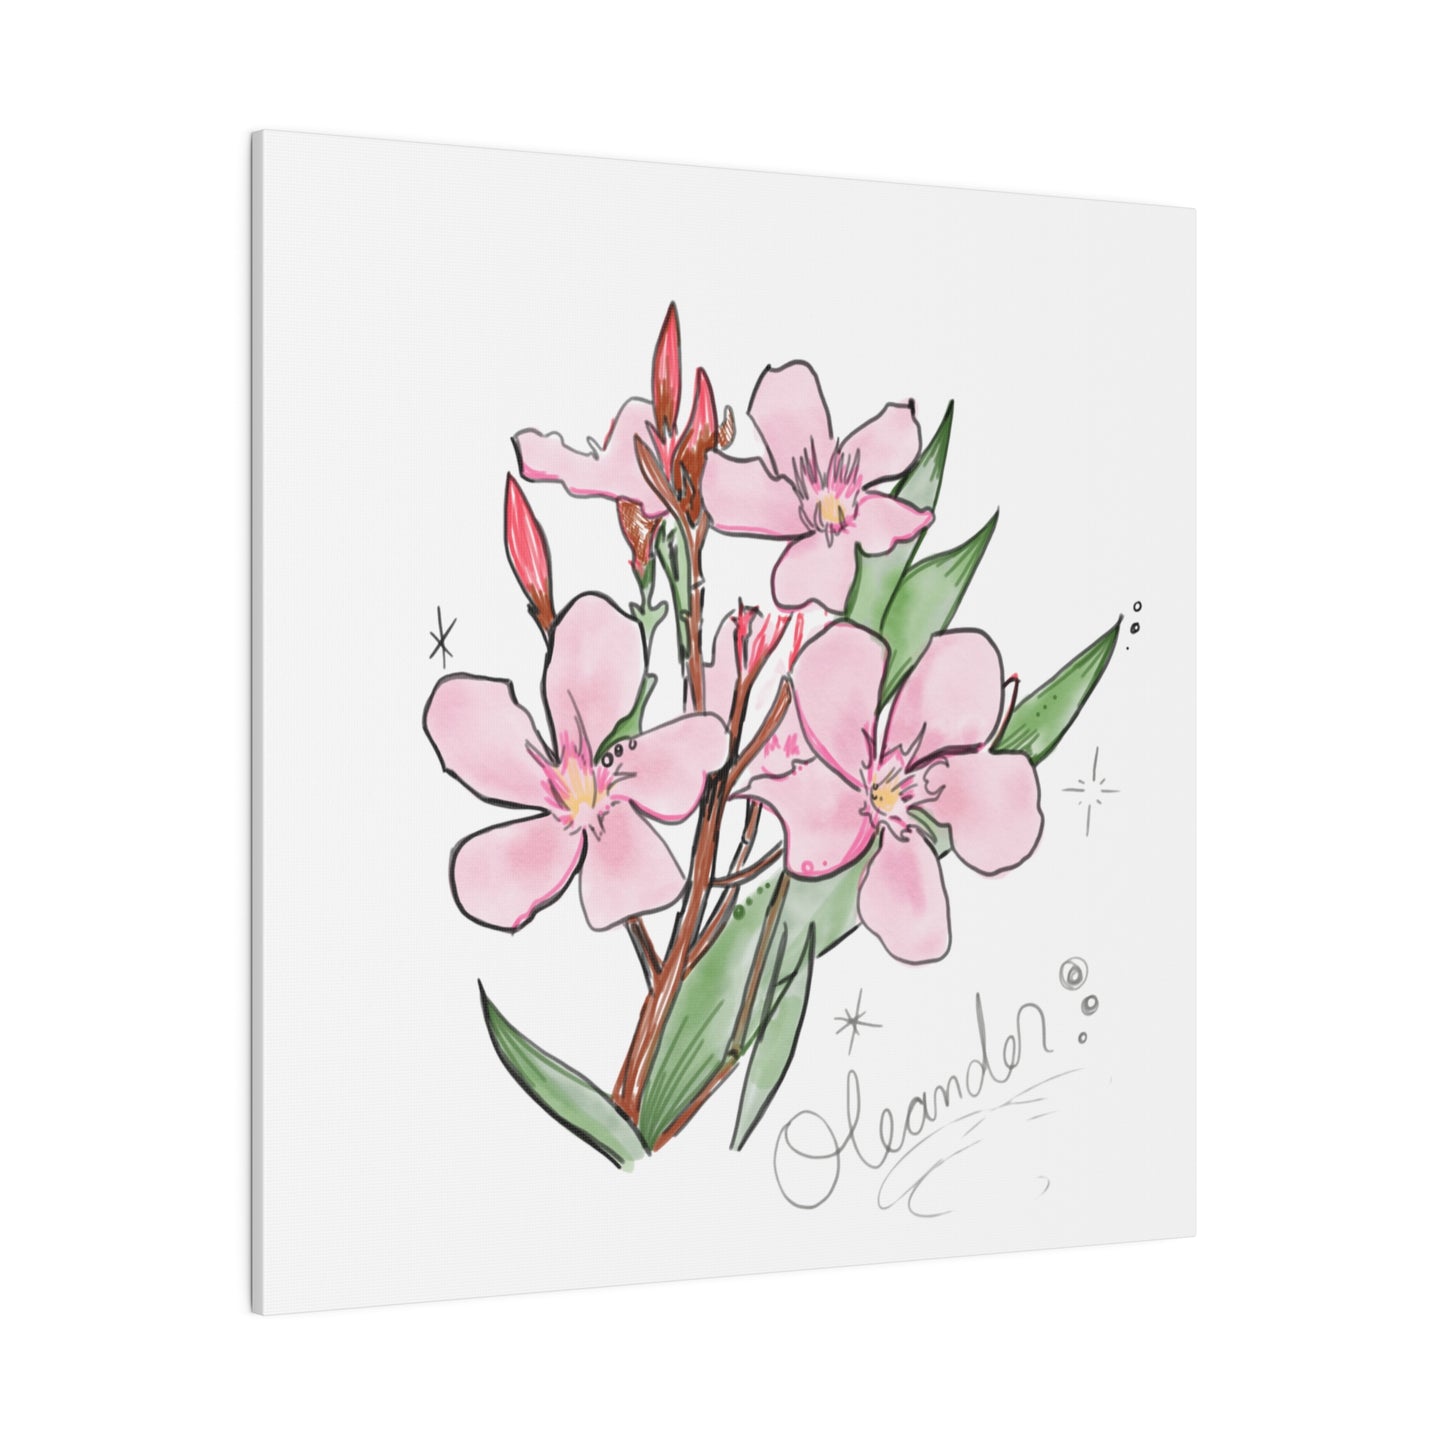 Pink Floral Oleander Watercolor inspired Illustration on Canvas